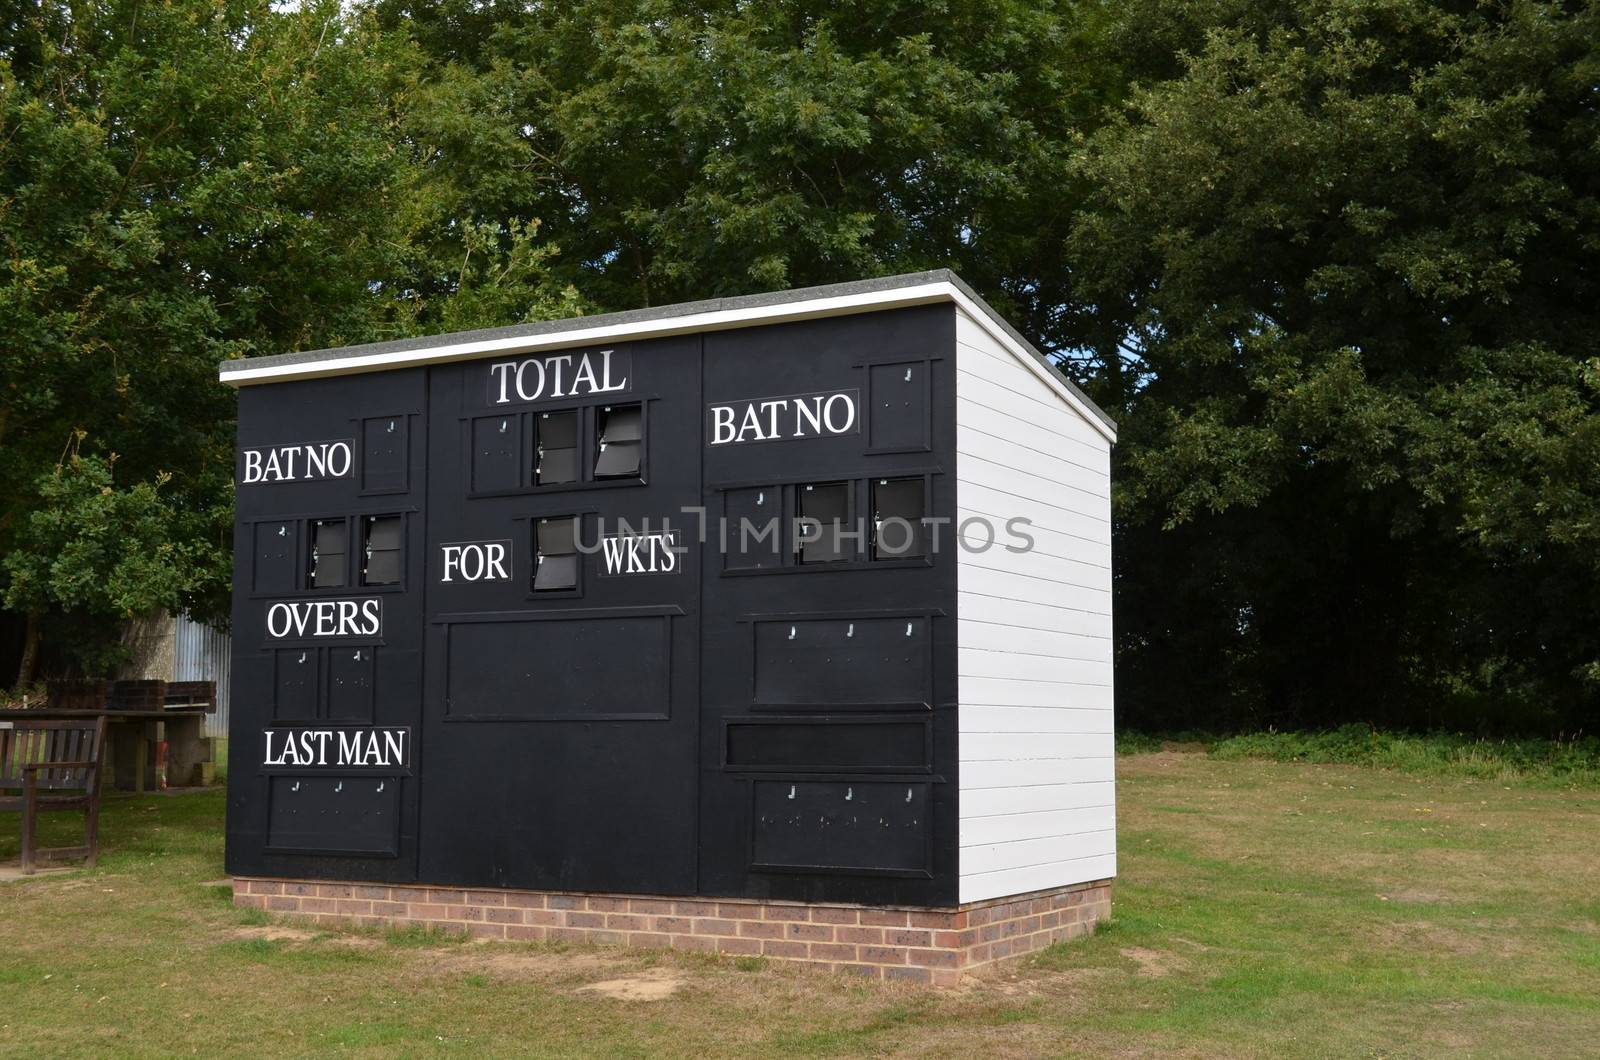 Cricket scoreboard hut at an English County cricket ground.